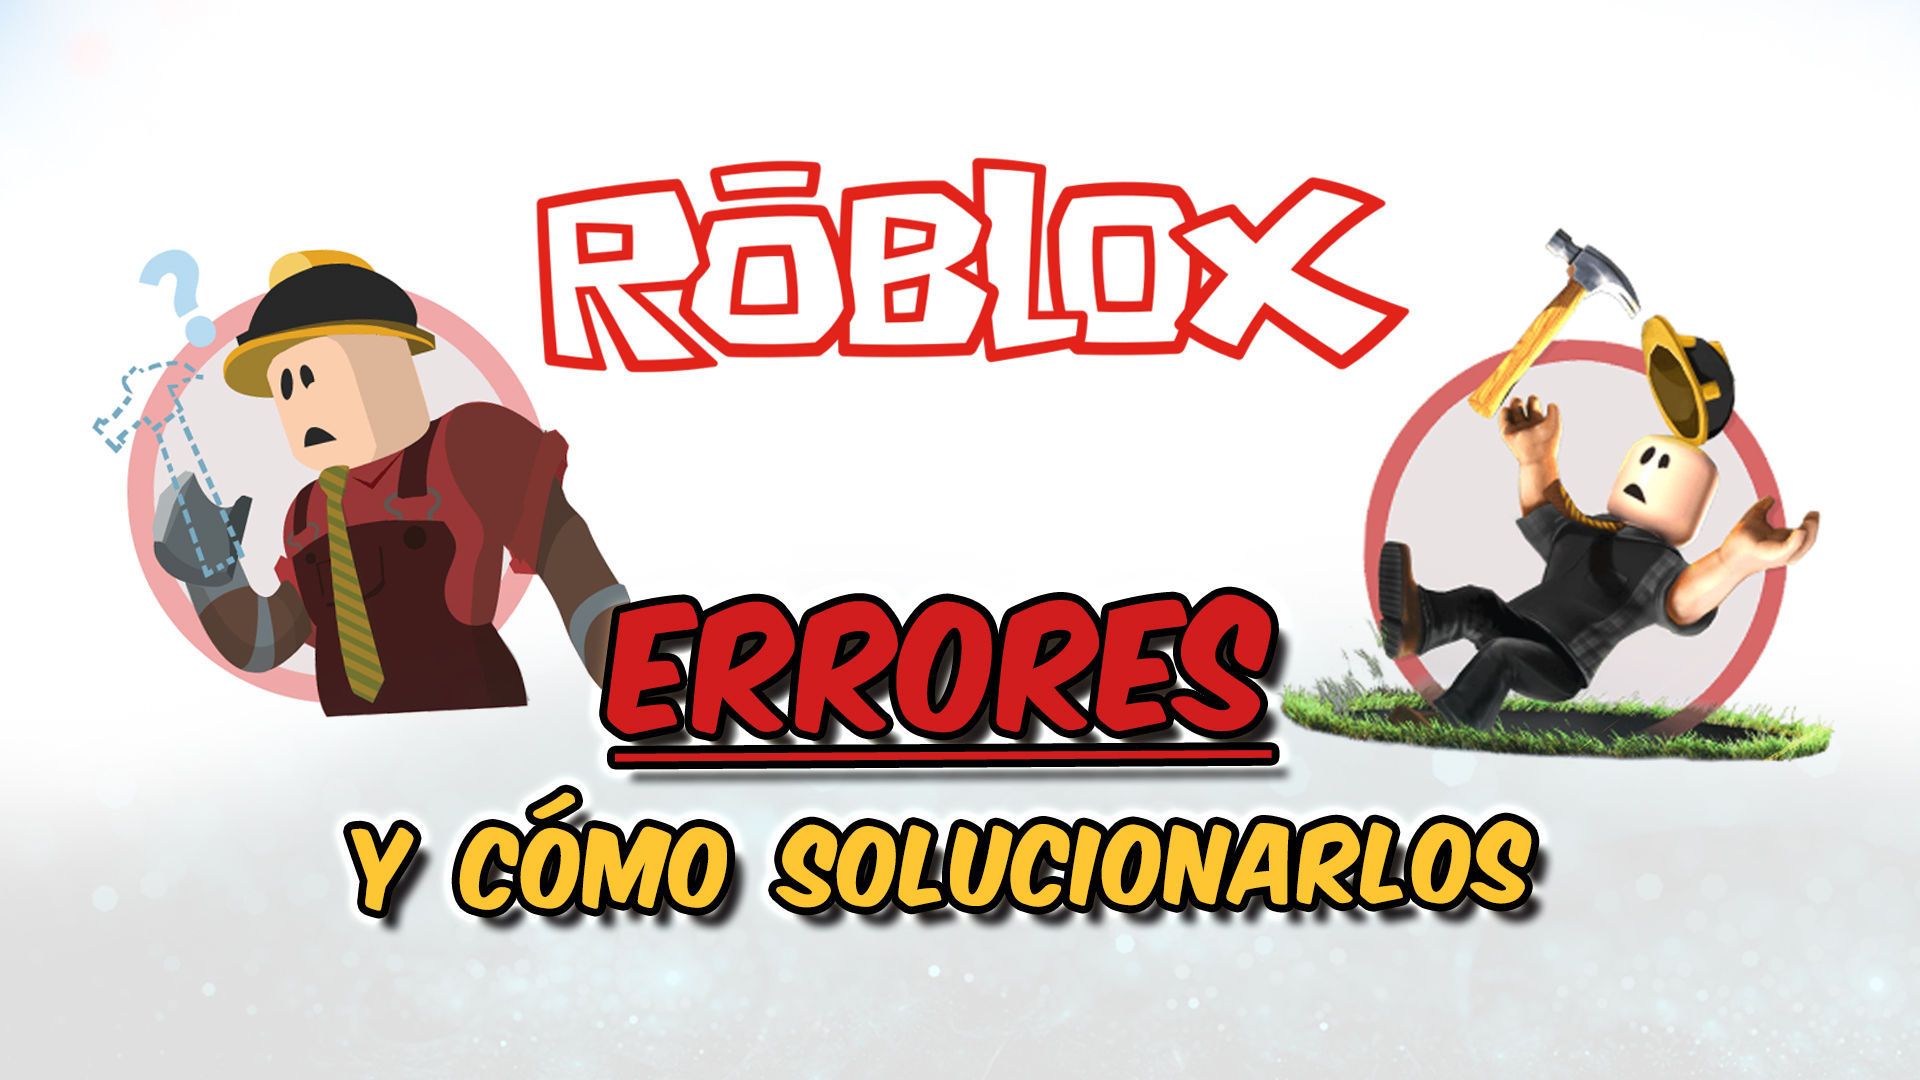 Roblox é códigos inquebráveis